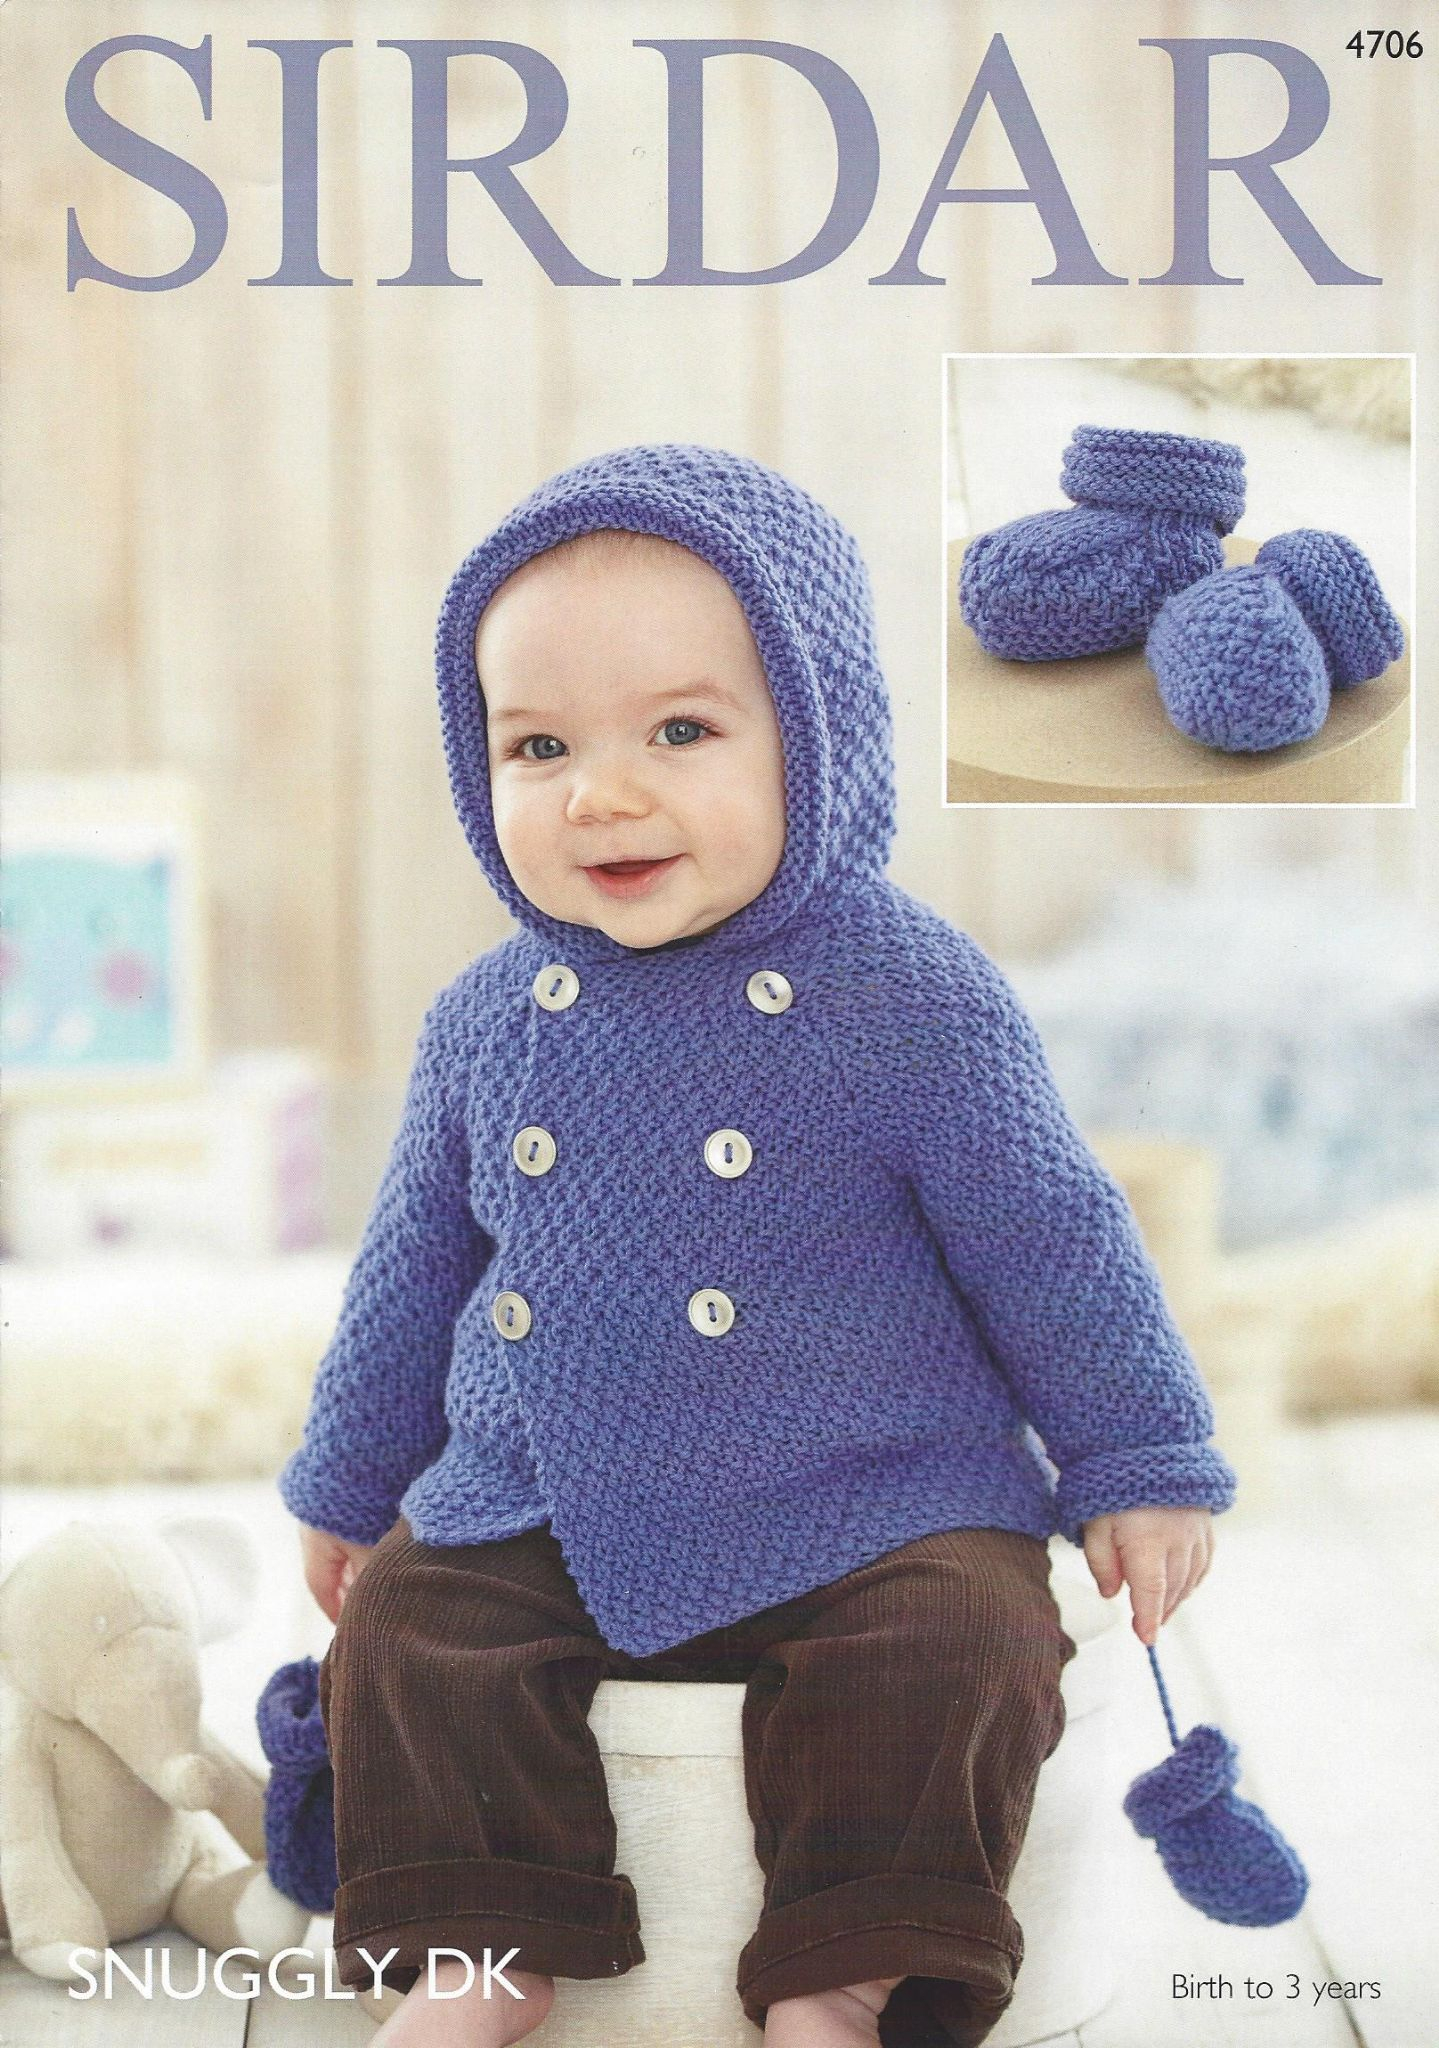 Sirdar Baby Knitting Patterns Sirdar Snuggly Dk 4706 Ba Boy S Coat Mittens Botees Knitting